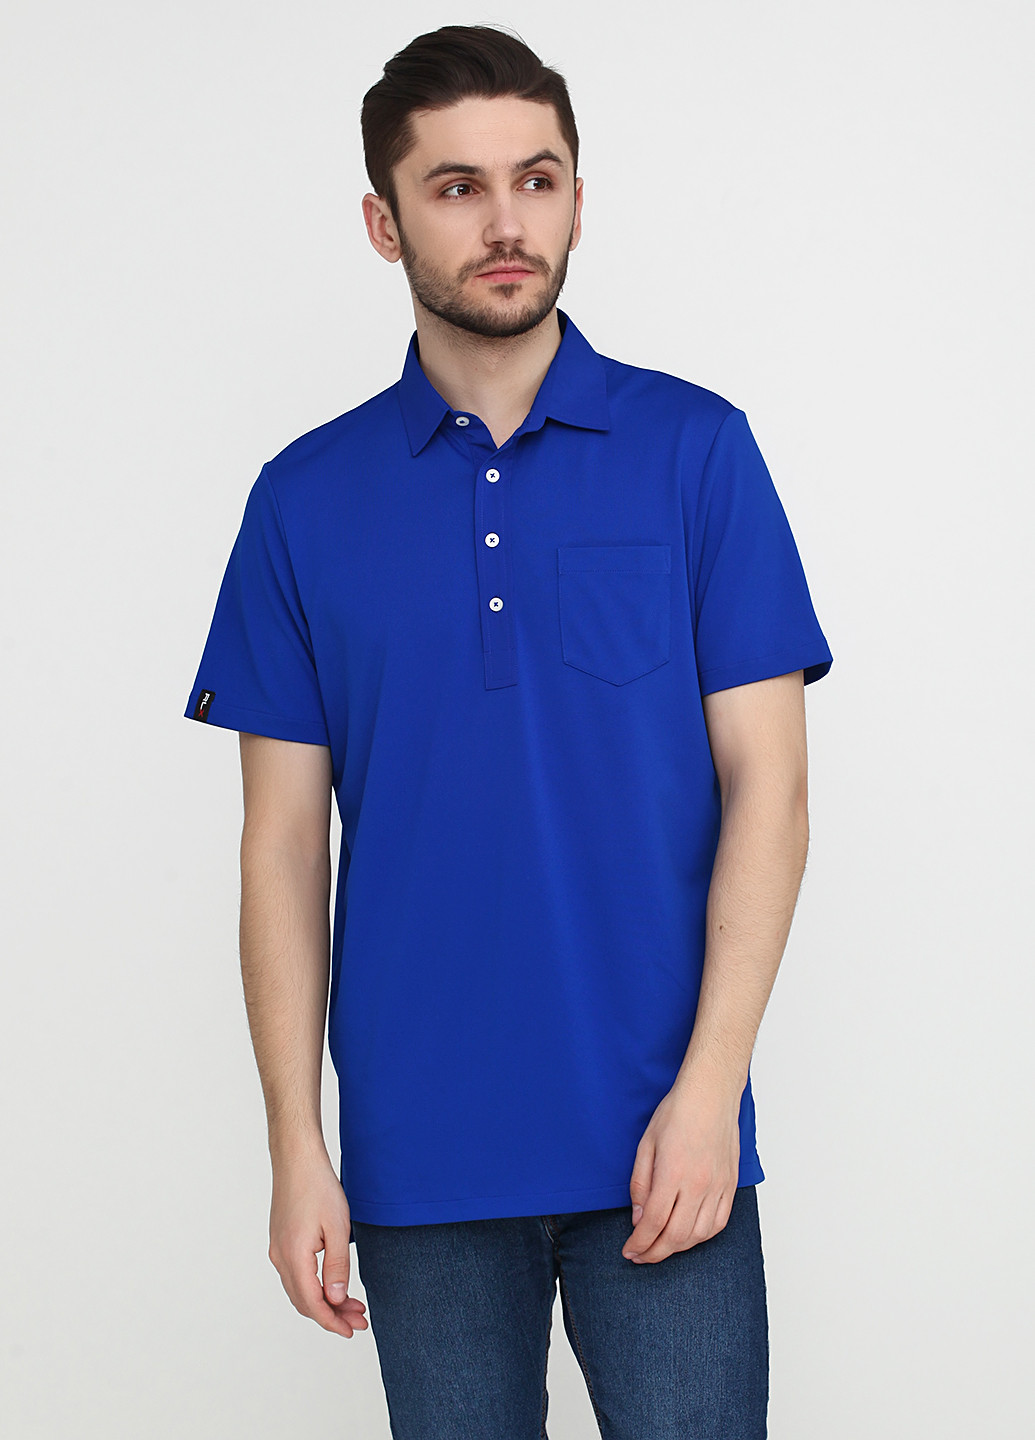 Синяя футболка-поло для мужчин Ralph Lauren однотонная